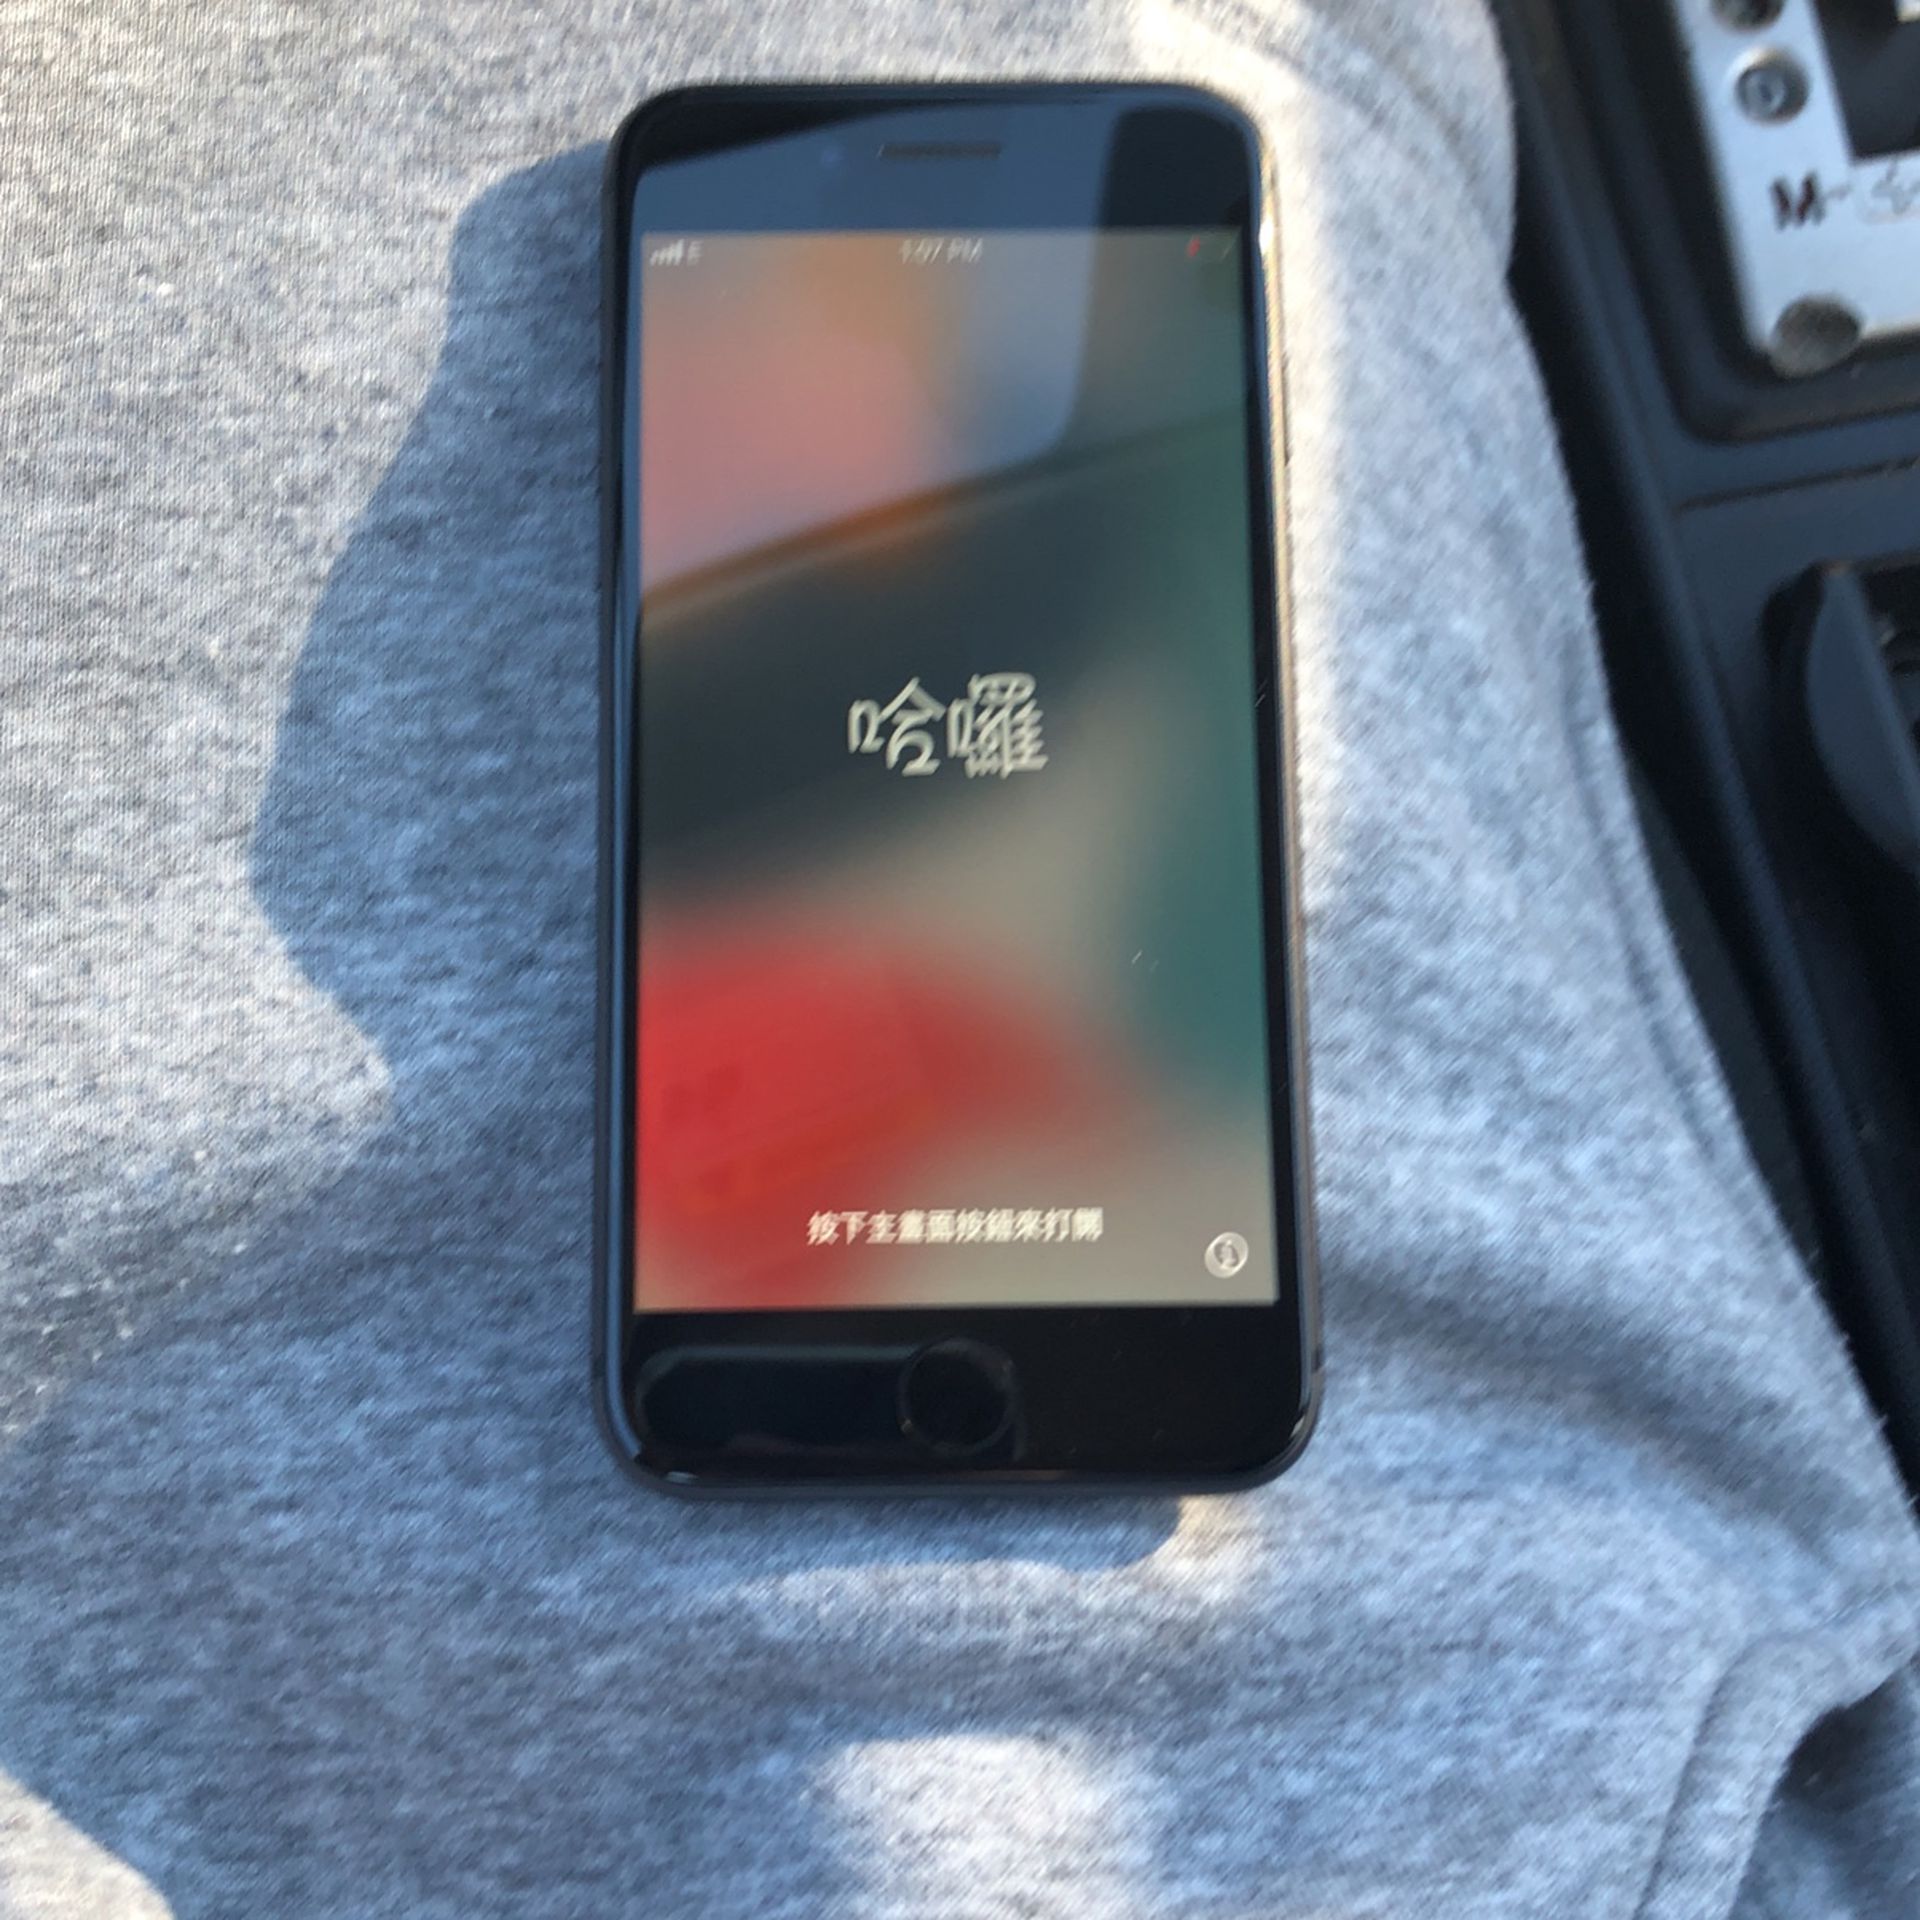 Iphone 8 (Space Gray, 64GB, Unlocked)